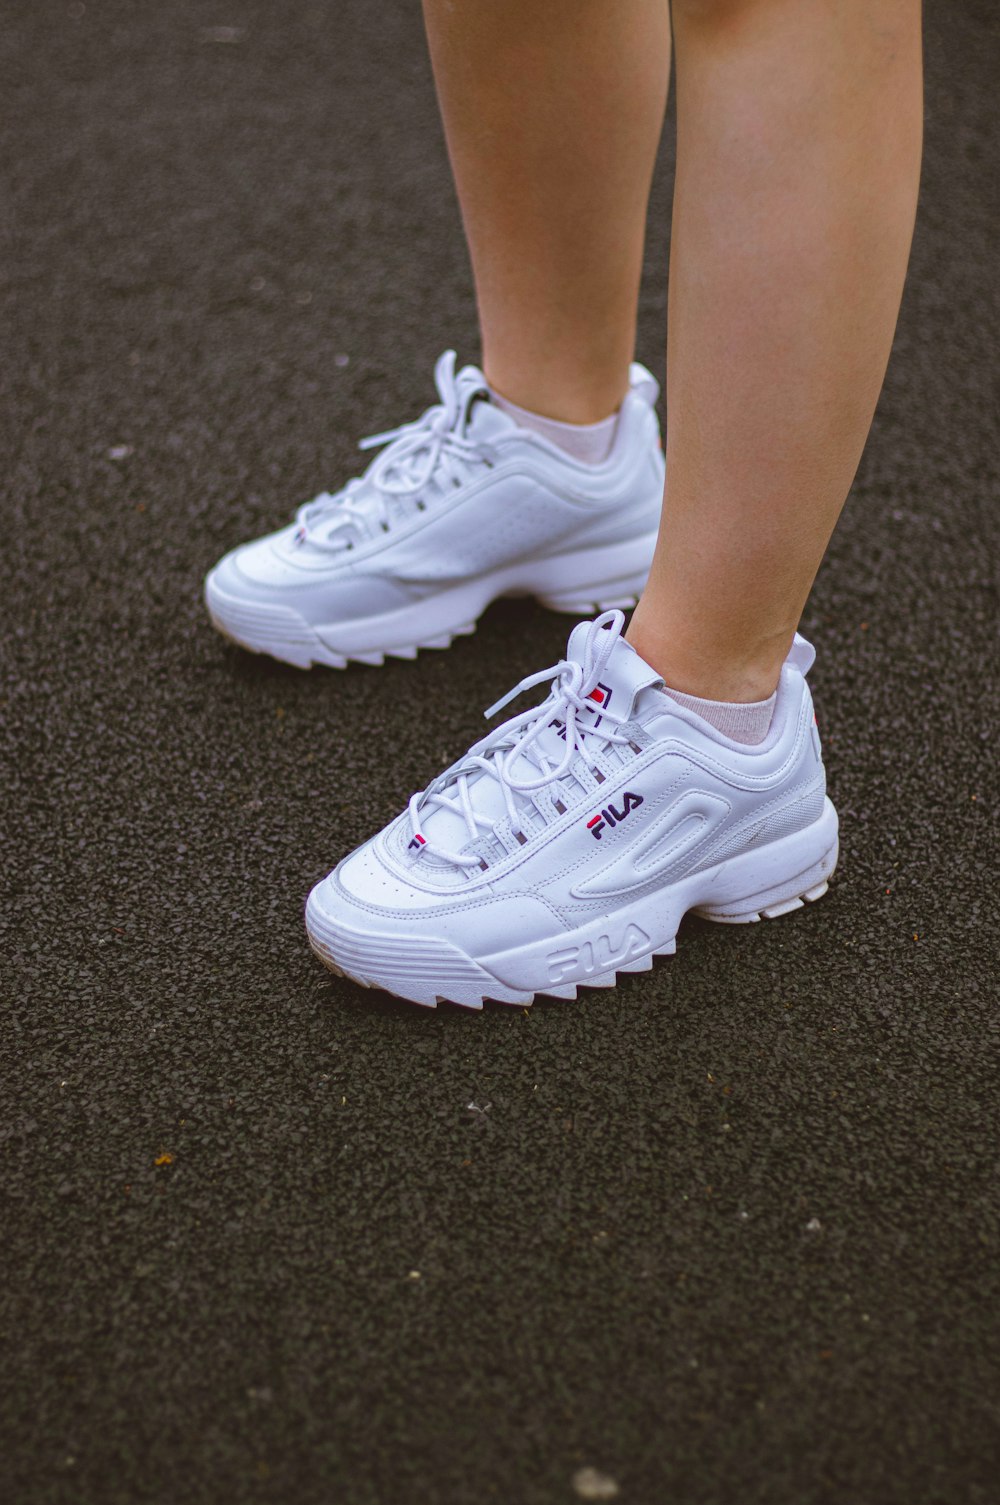 person wearing white nike athletic shoes photo – Free Image on Unsplash